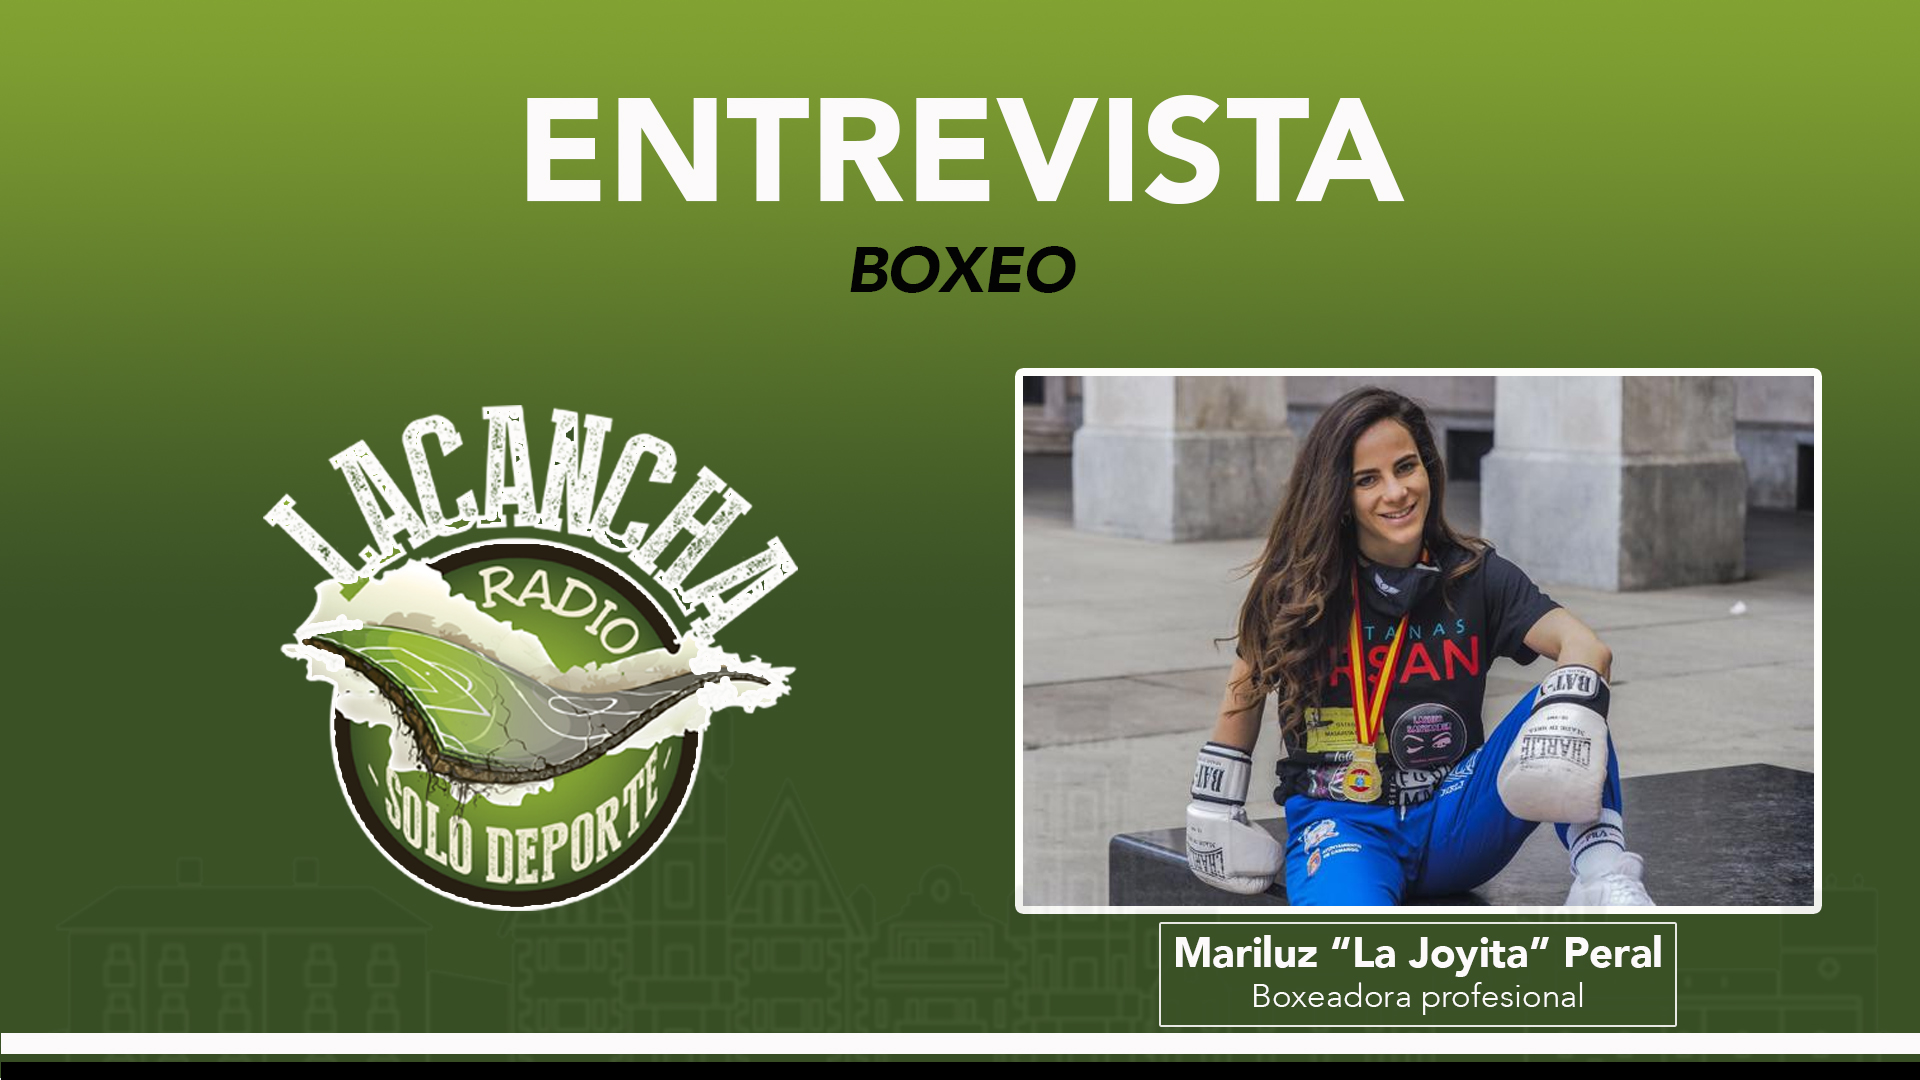 Entrevista con Mariluz “La Joyita” Peral, boxeadora cántabra (13/07/2022)